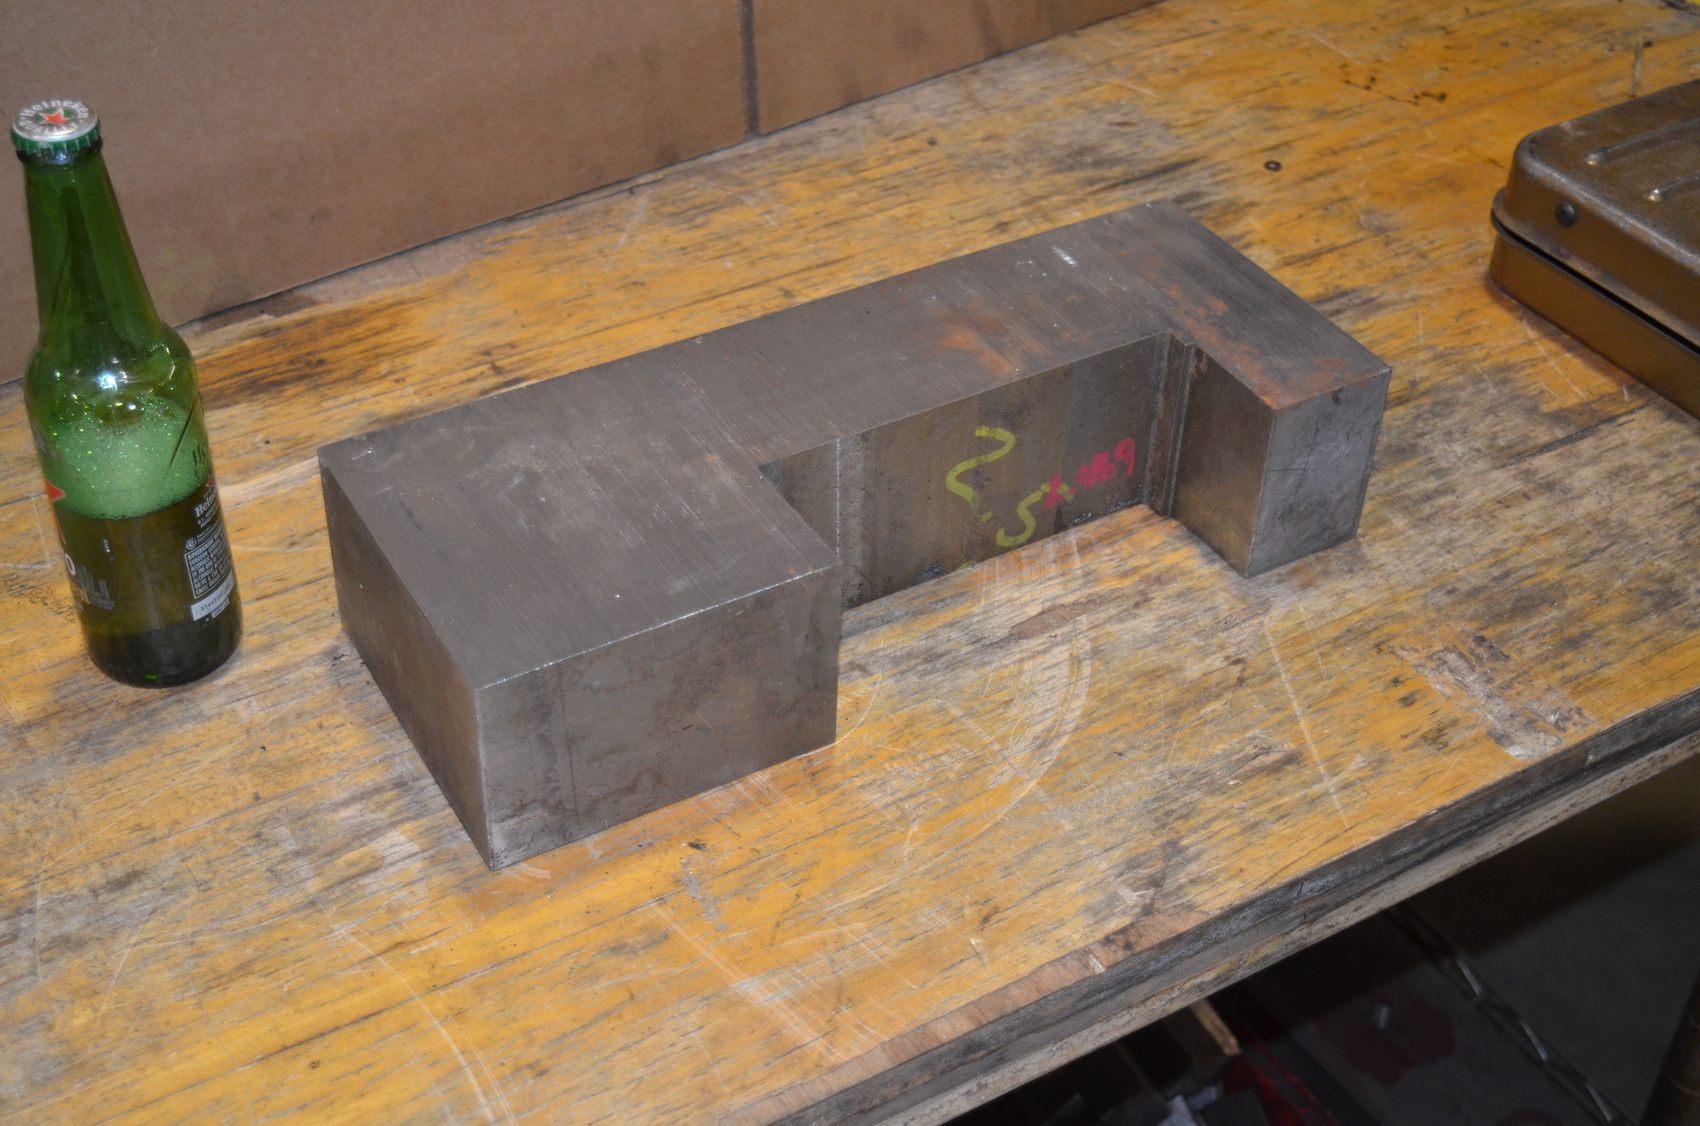 P-20 Steel Bar for Hydraulic Press Blacksmith's Anvil,67 lb 15x6x3.5"